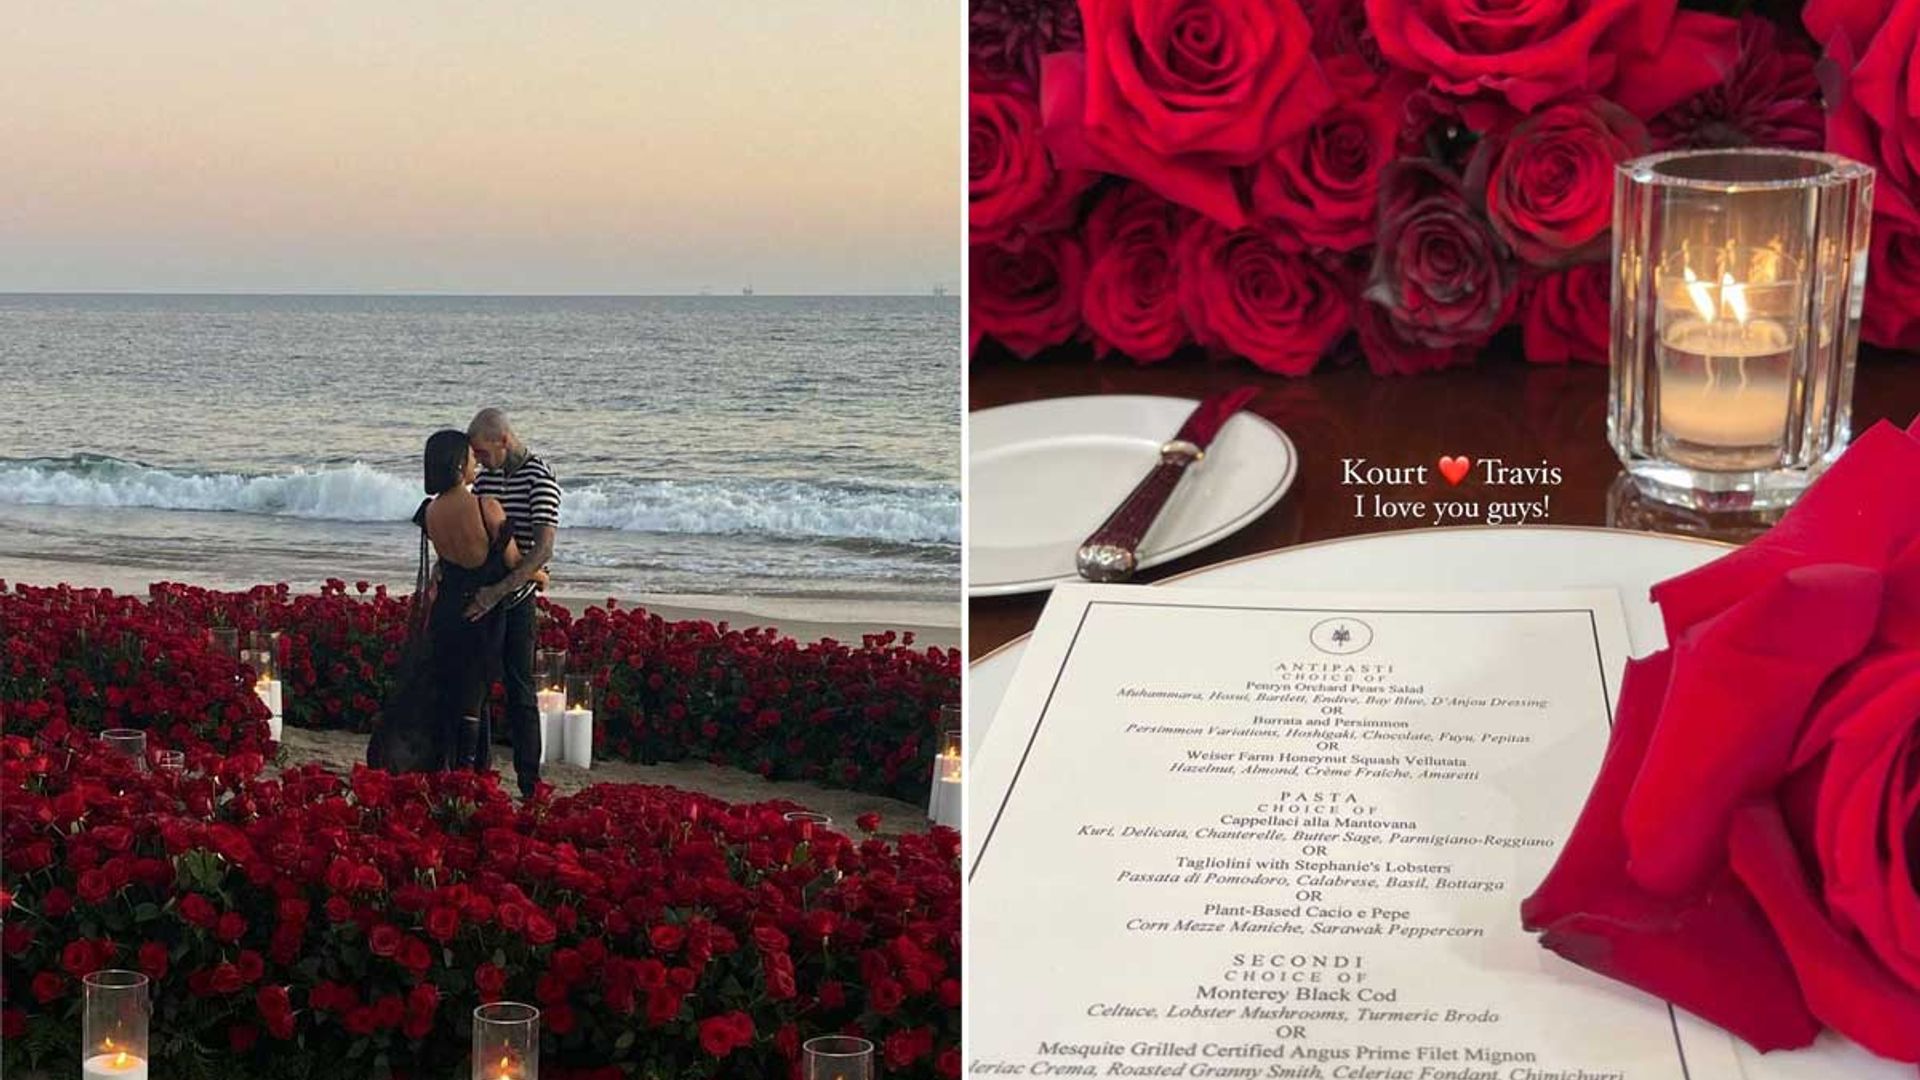 Kourtney Kardashian's engagement party menu at $8,000 per night hotel is jaw-dropping